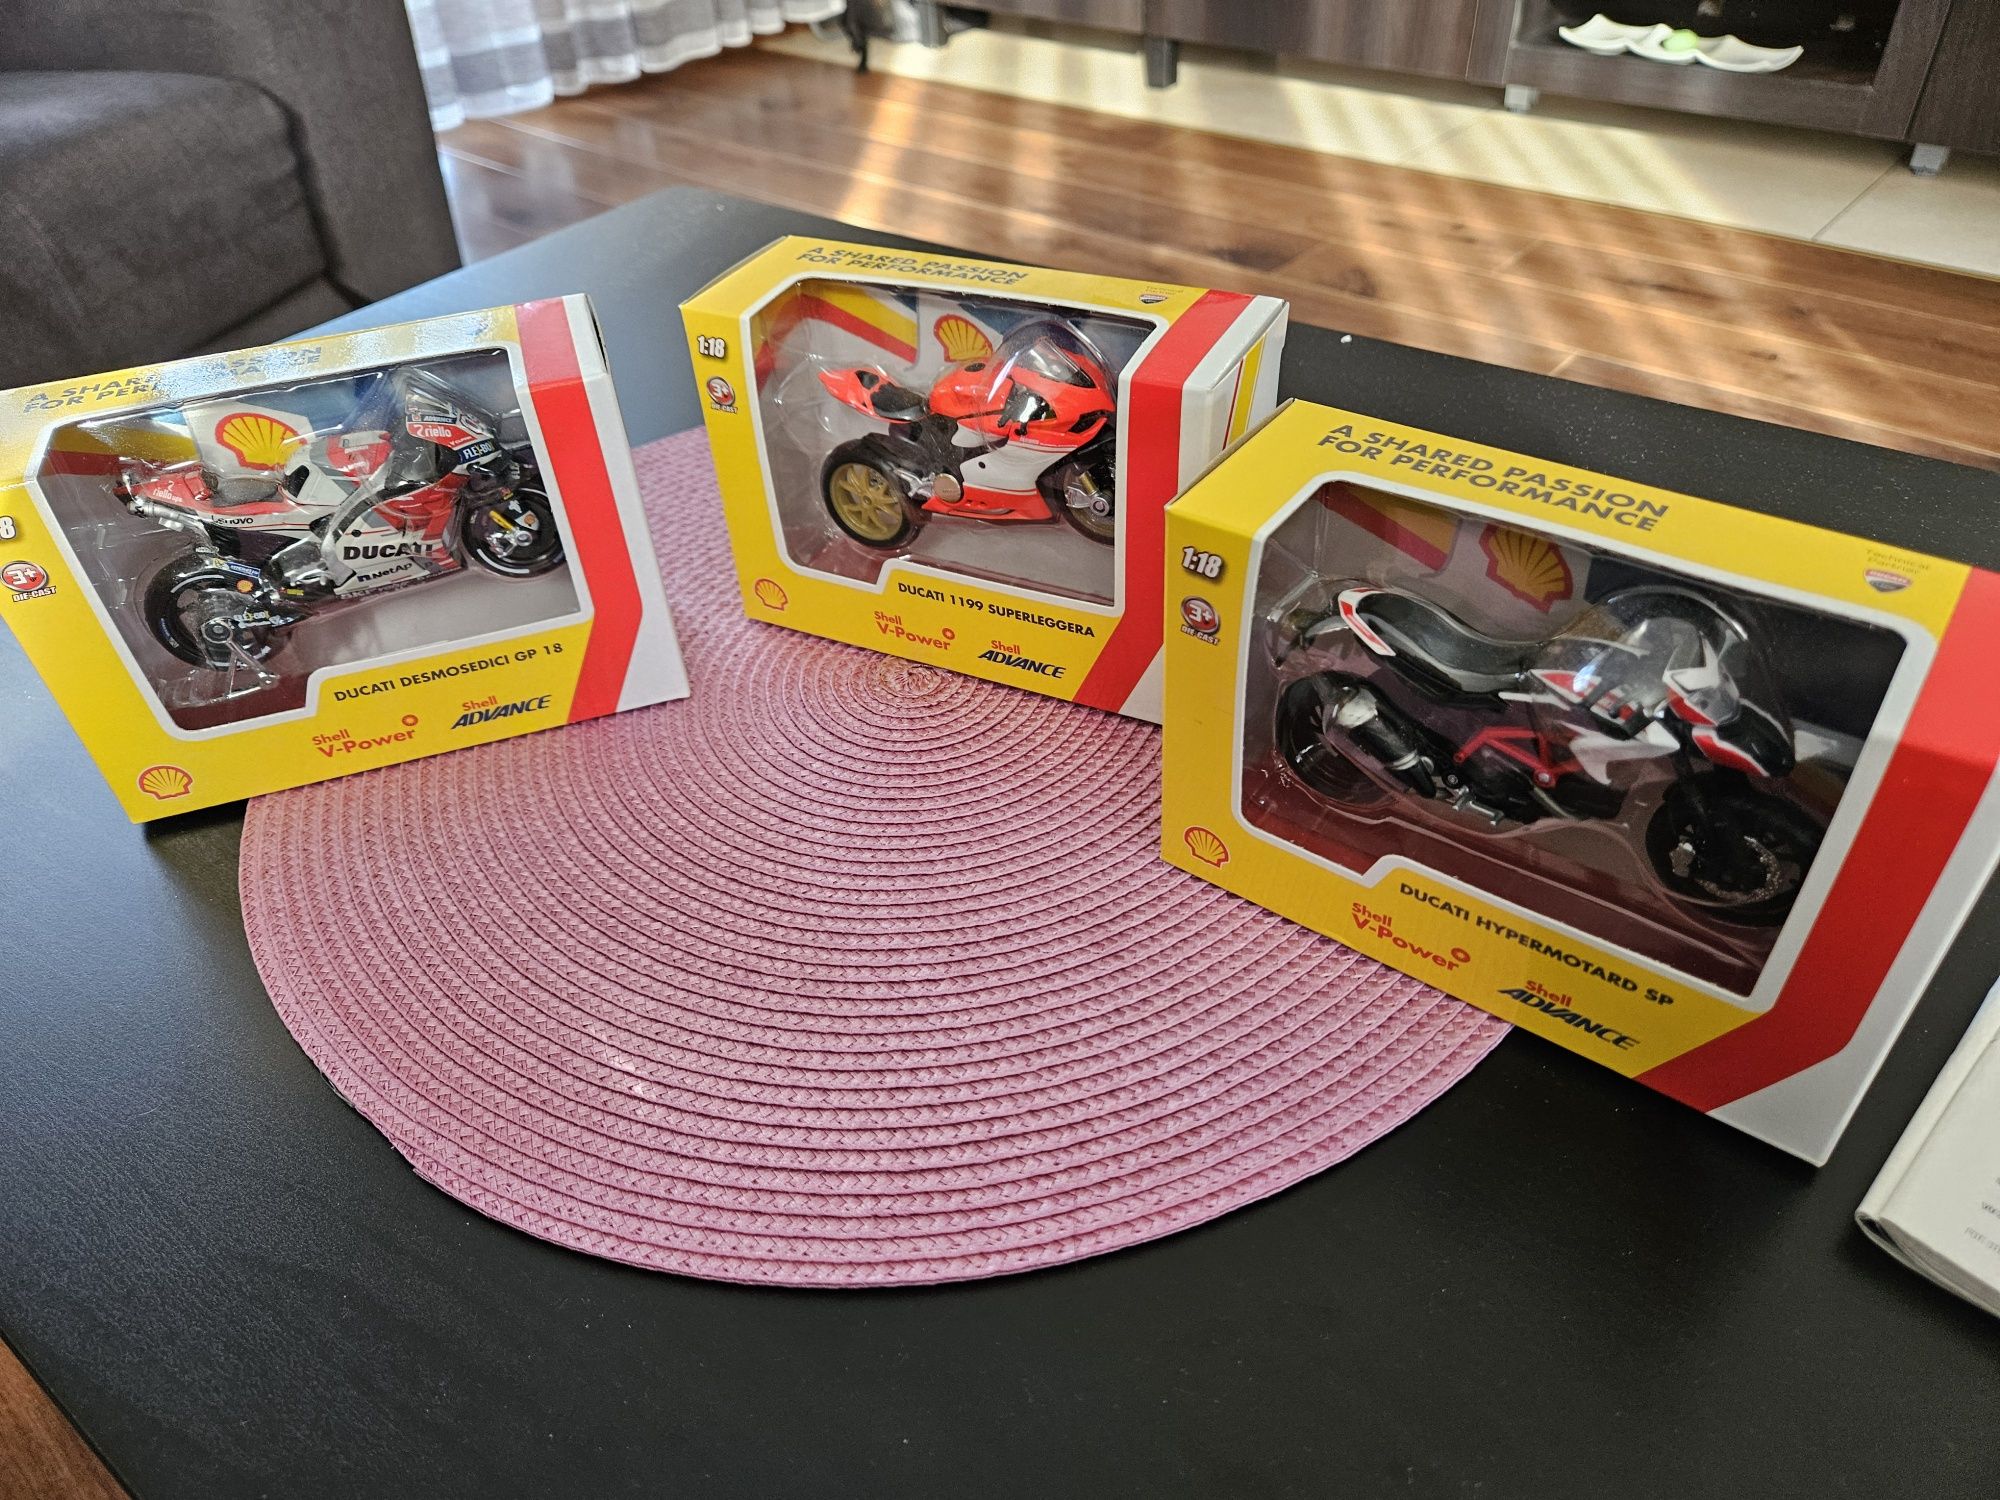 Model motocykl Ducati z shella